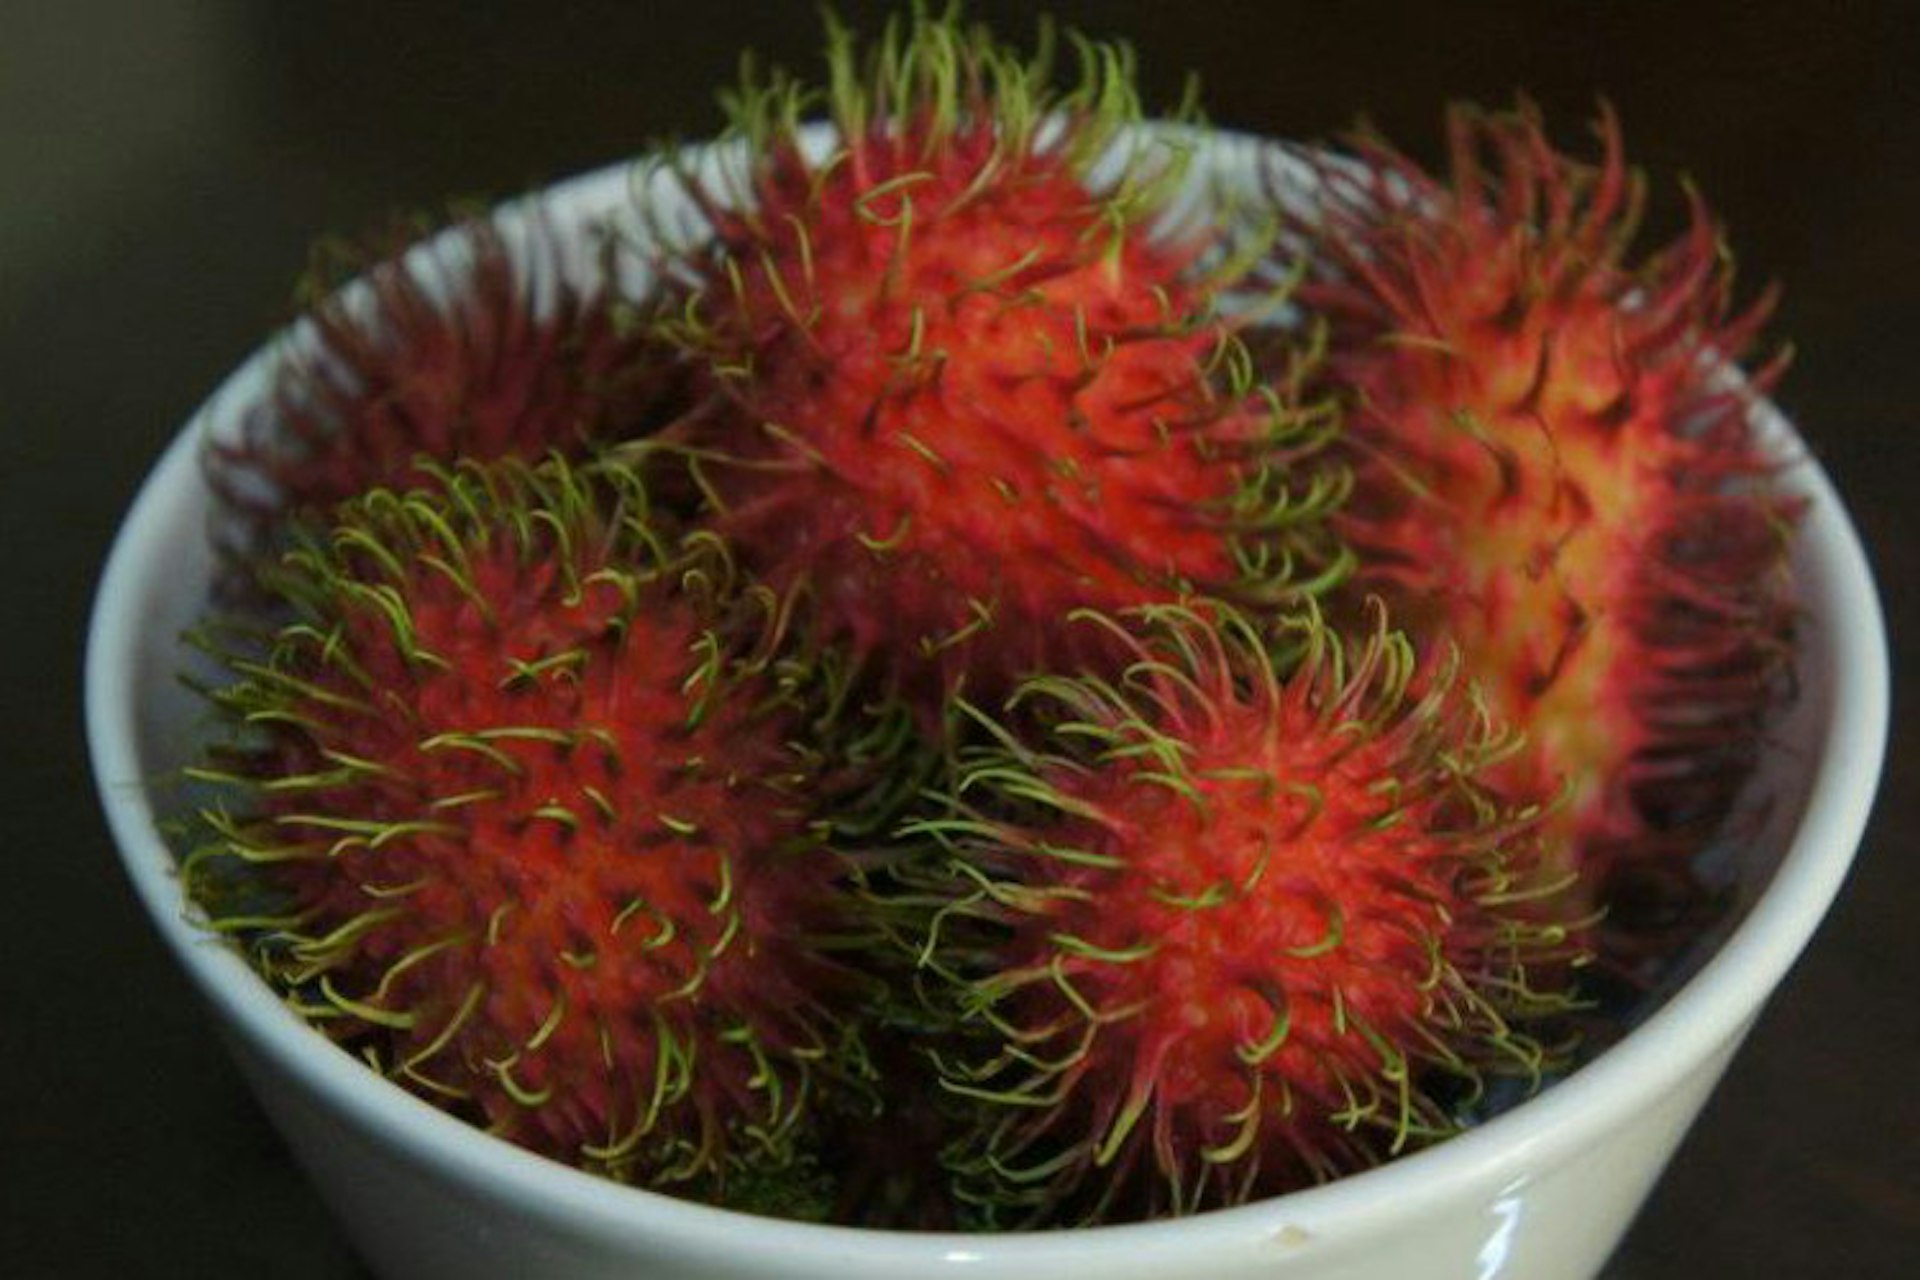 A bowl of the sweet-tasting tropical rambutan. Image by Scott / CC BY-SA 2.0